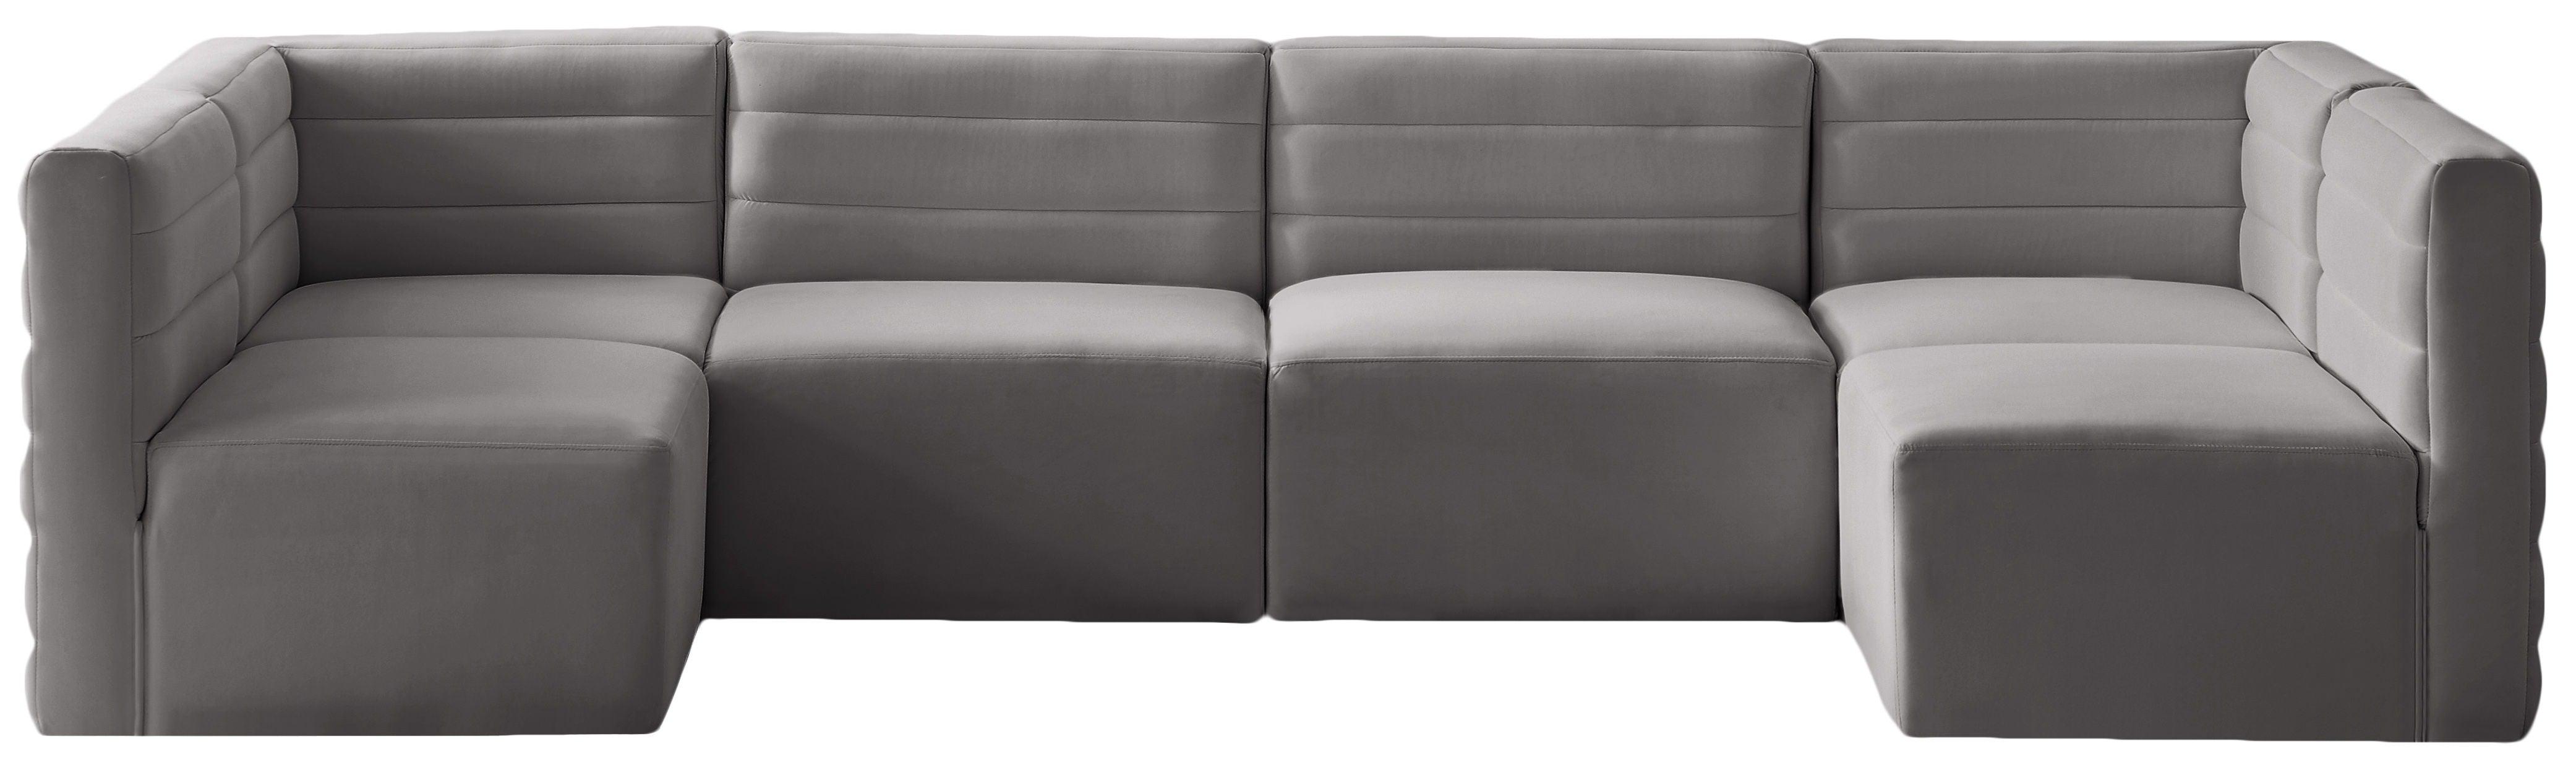 Meridian Furniture - Quincy - Modular Sectional 6 Piece - Grey - Fabric - 5th Avenue Furniture